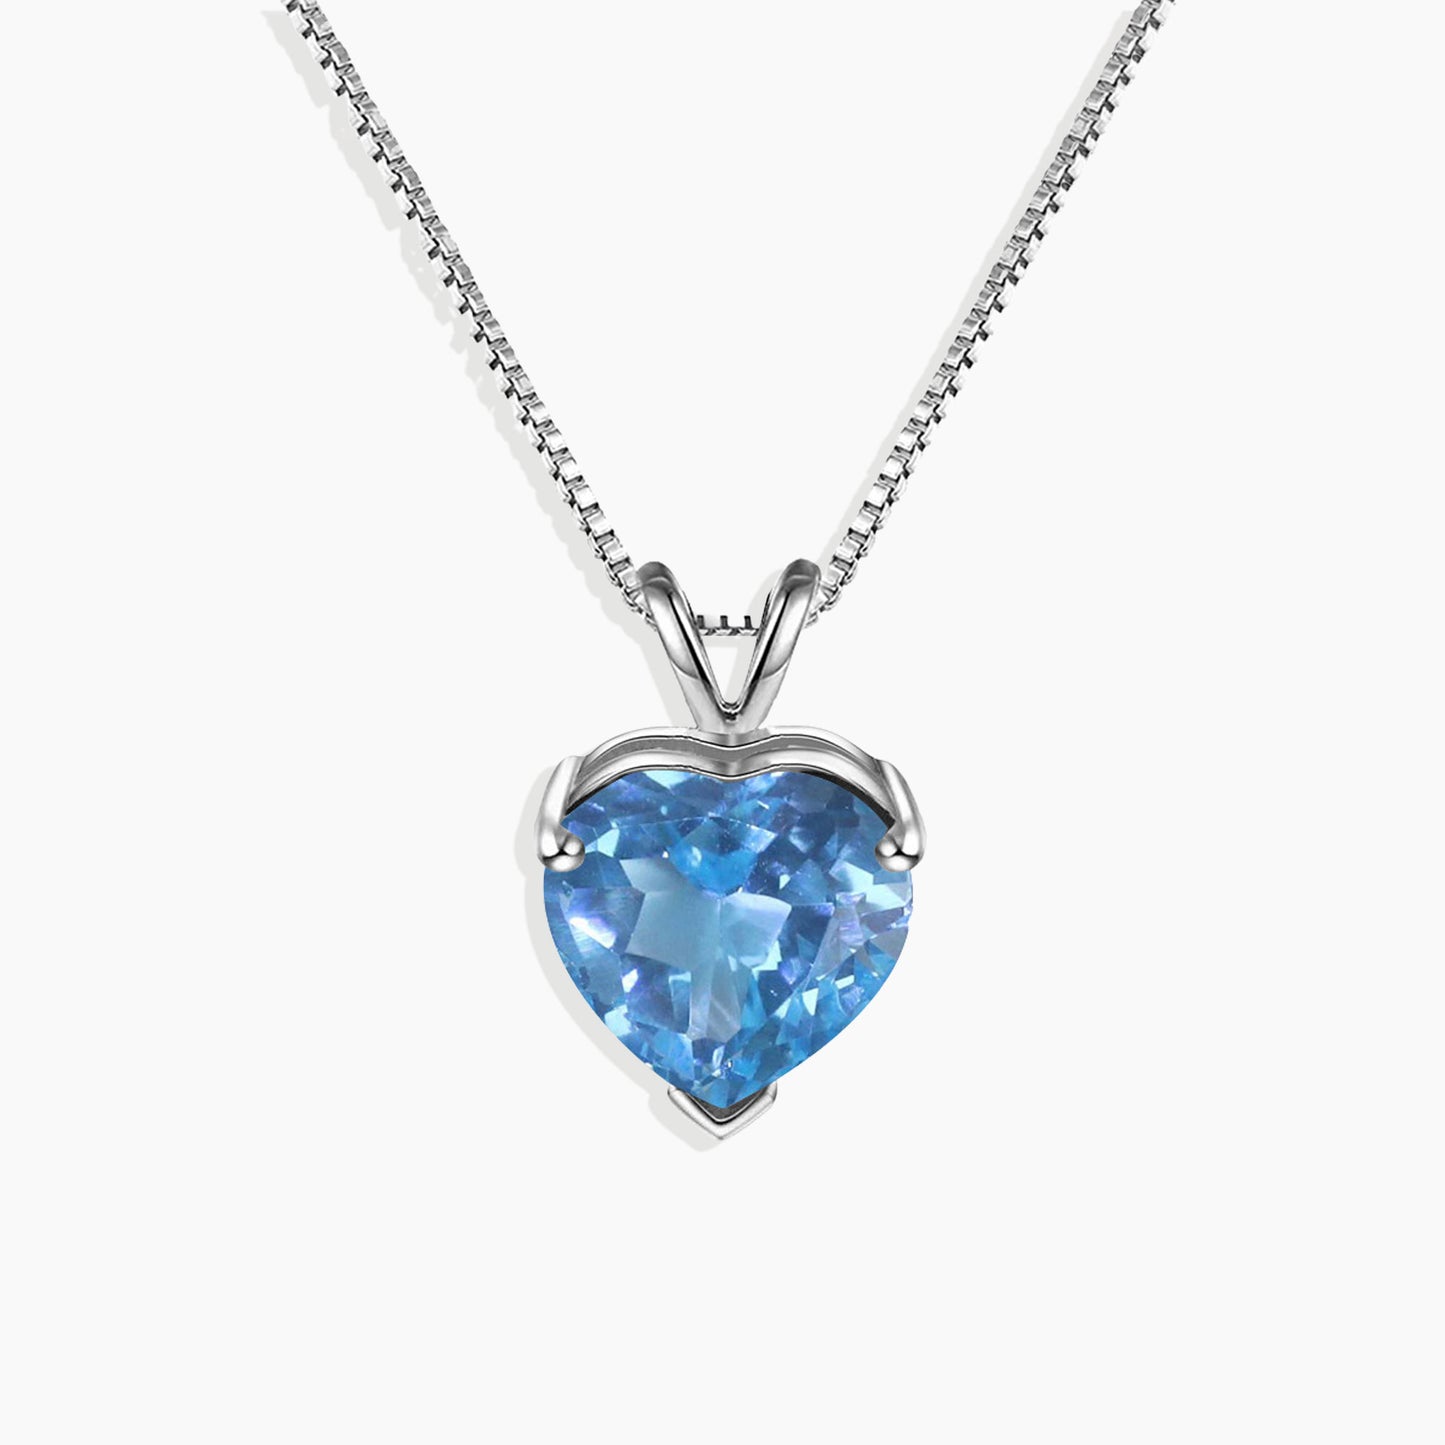 Heart Shaped Gemstone Necklace in Sterling Silver -  Swiss Blue Topaz